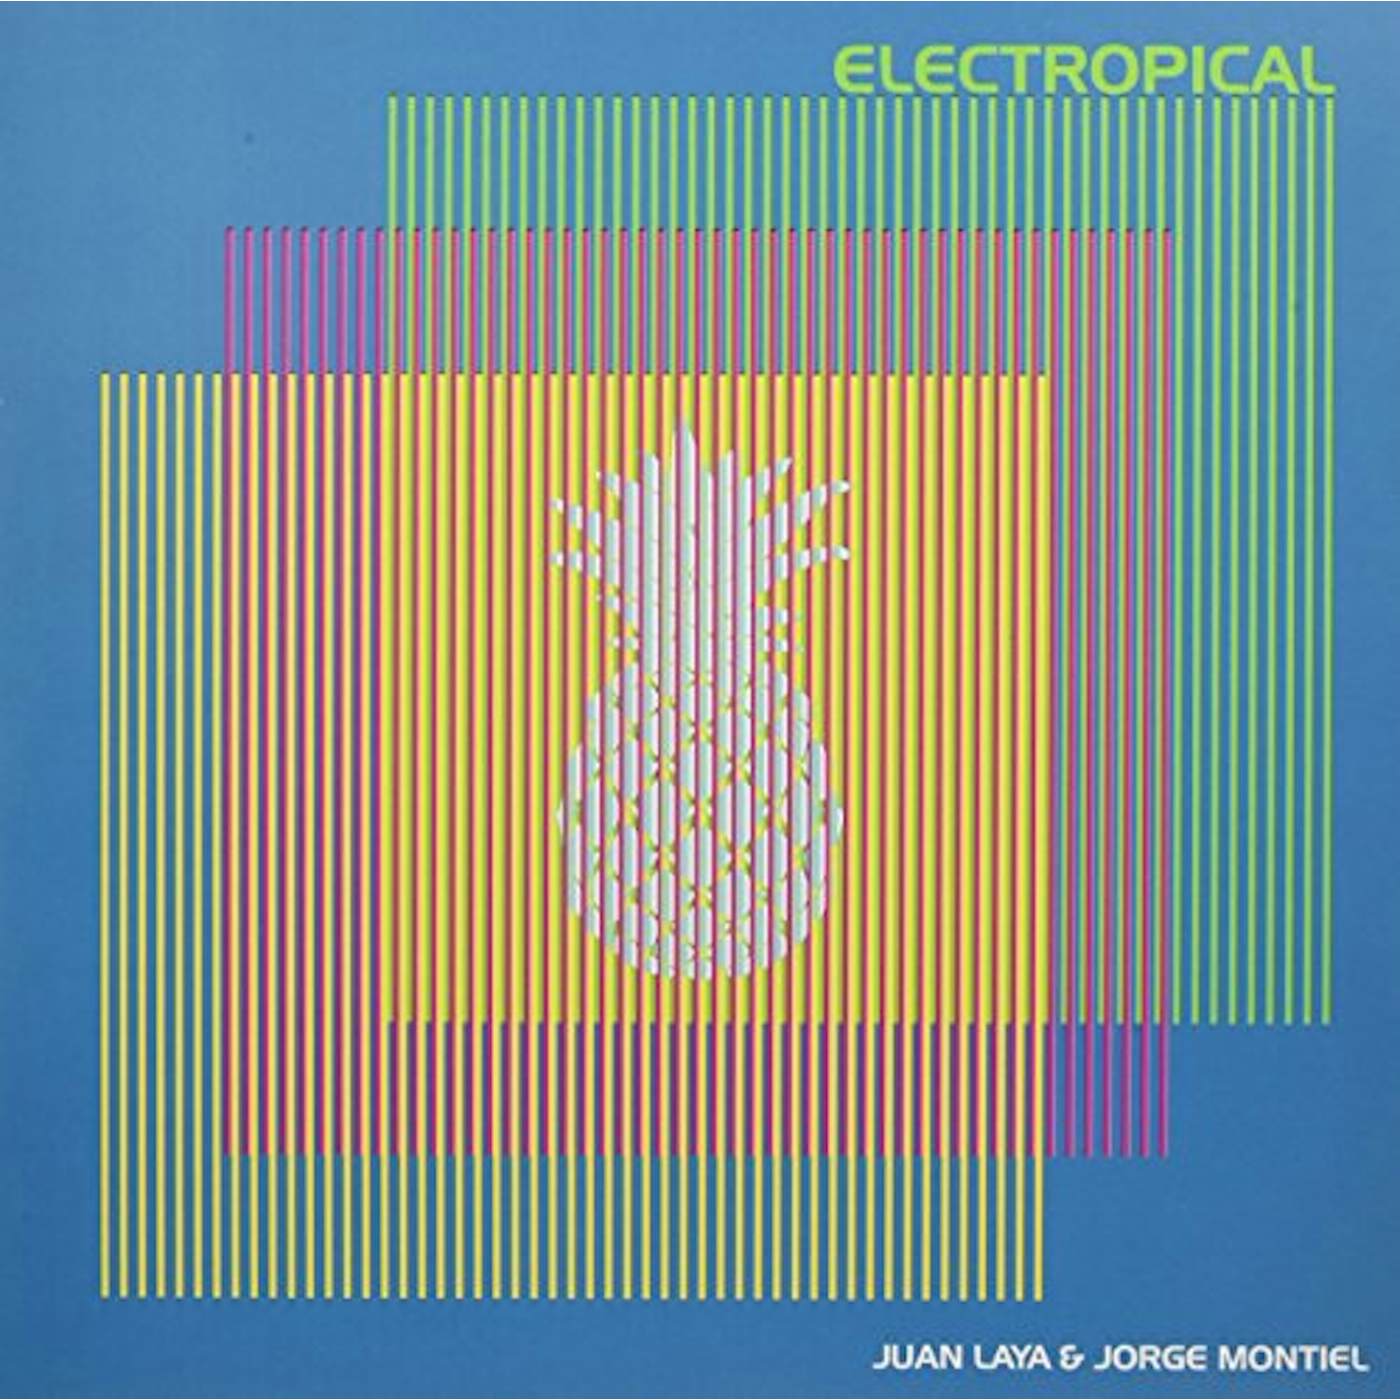 Juan Laya & Jorge Montiel Electropical Vinyl Record